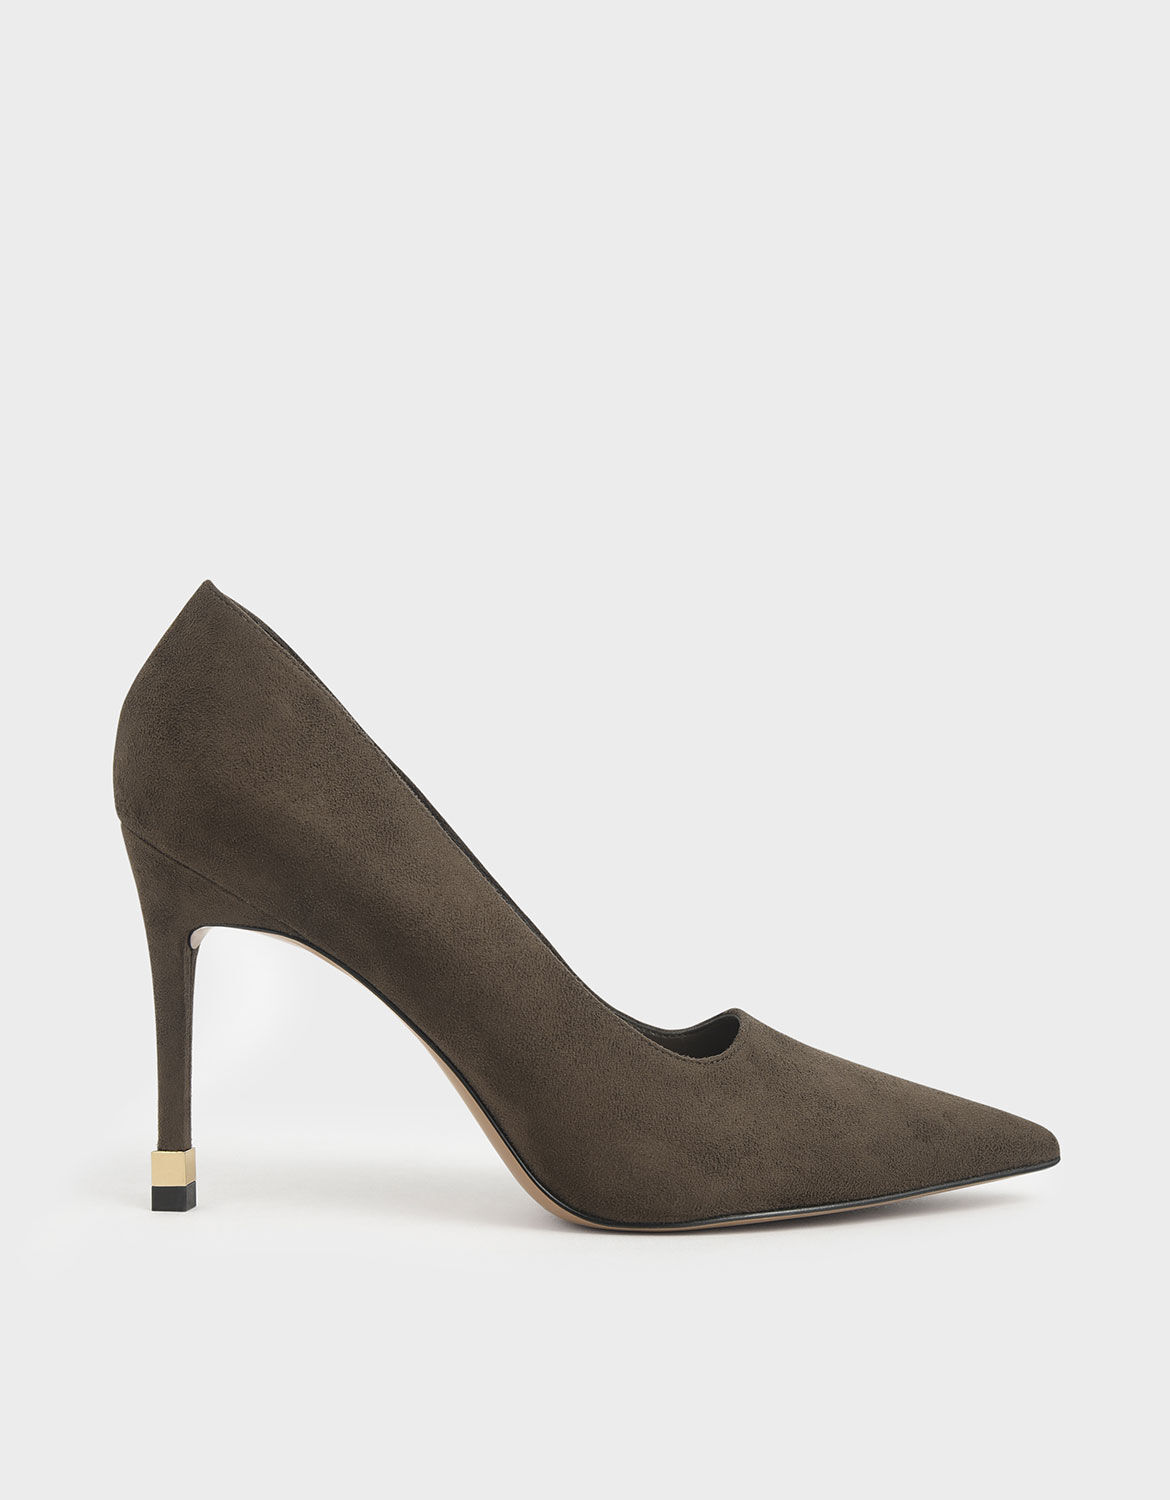 chrome stiletto heels